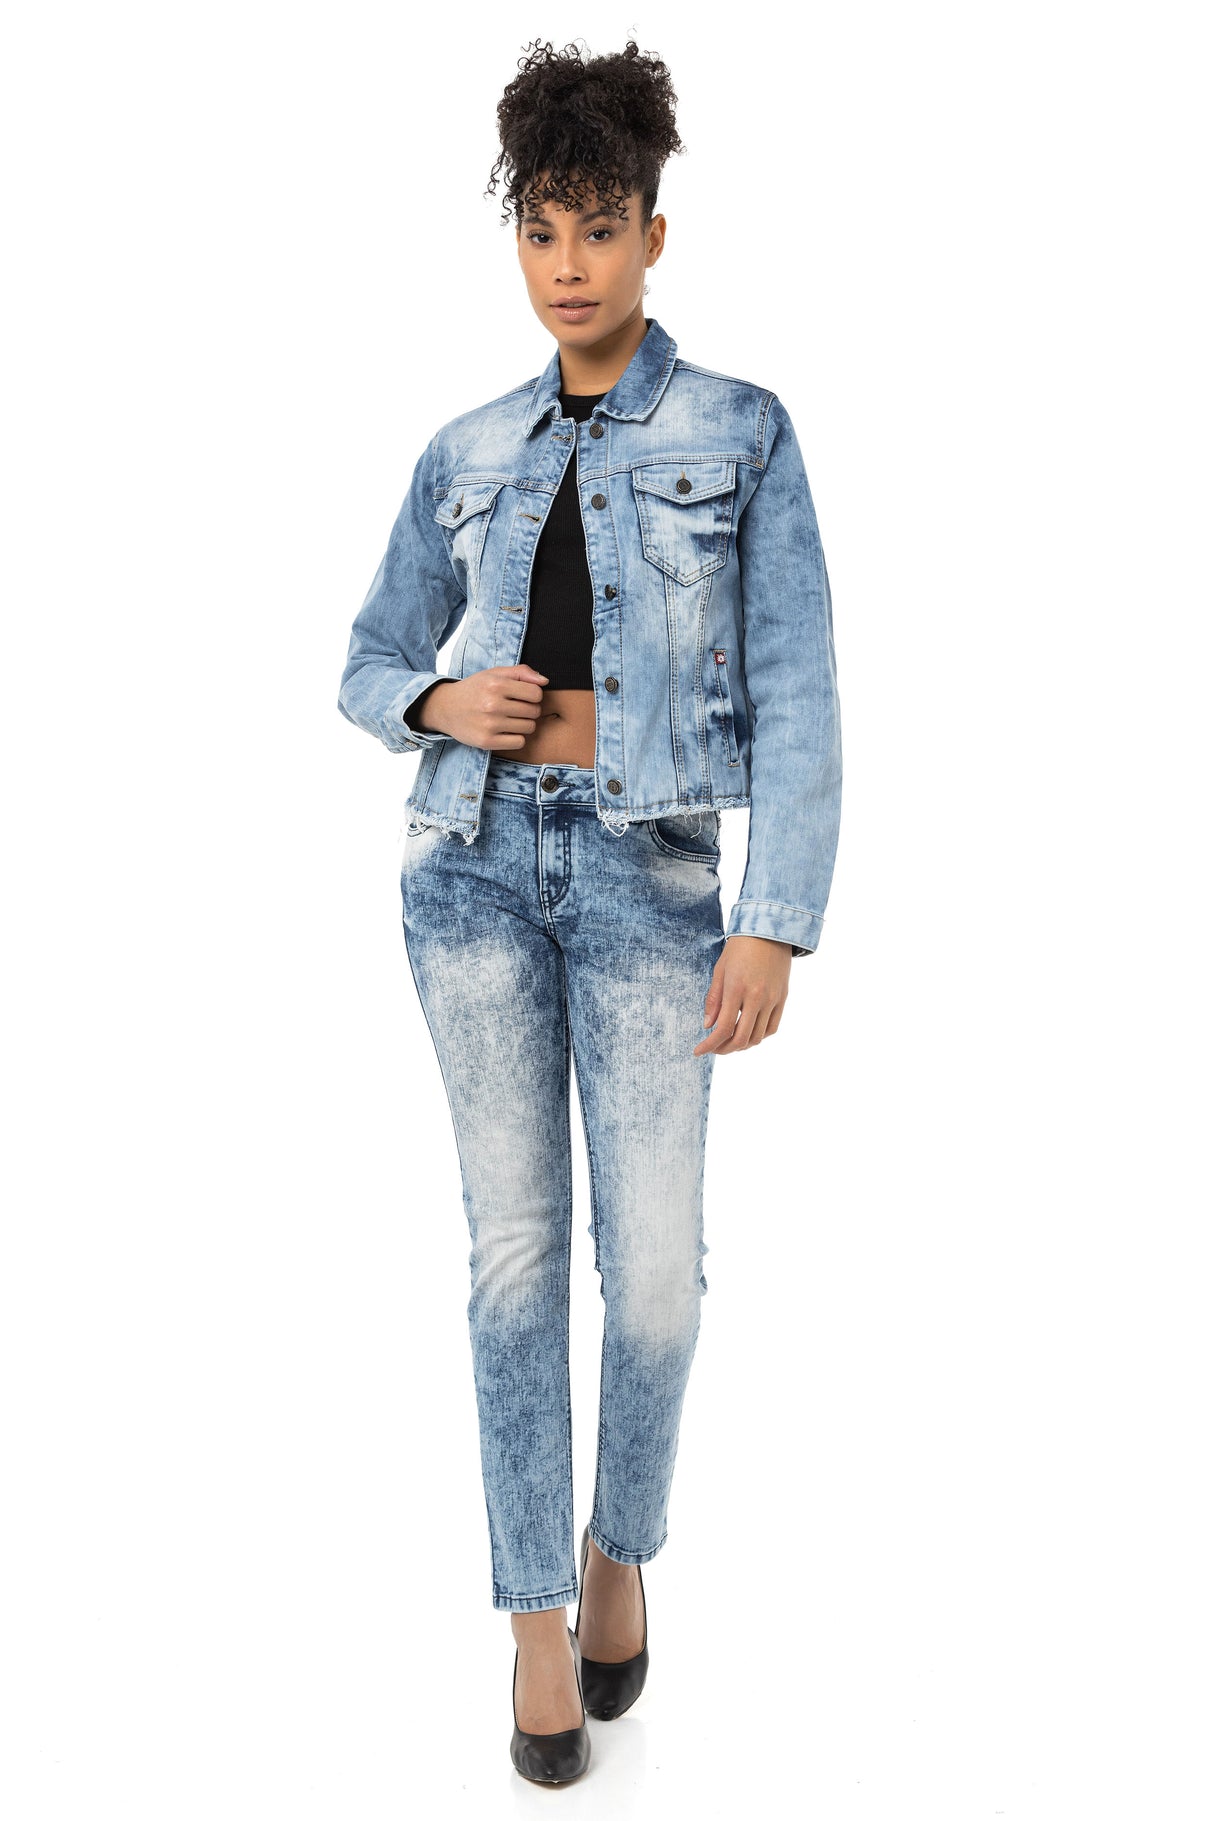 WD459 Damen Slim-Fit-Jeans im modernen Look